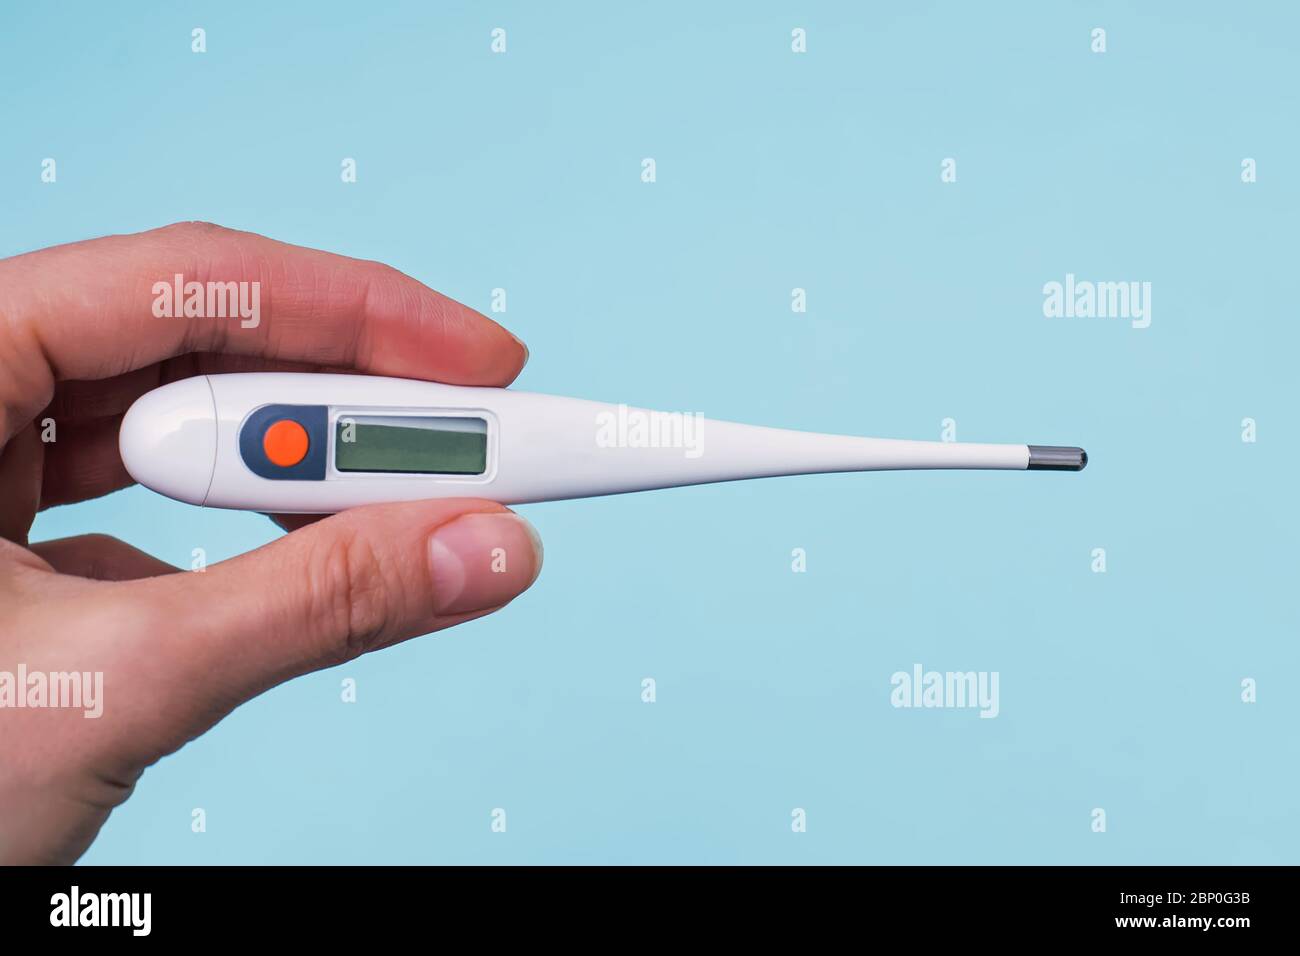 https://c8.alamy.com/comp/2BP0G3B/hand-holding-a-digital-thermometer-close-up-2BP0G3B.jpg